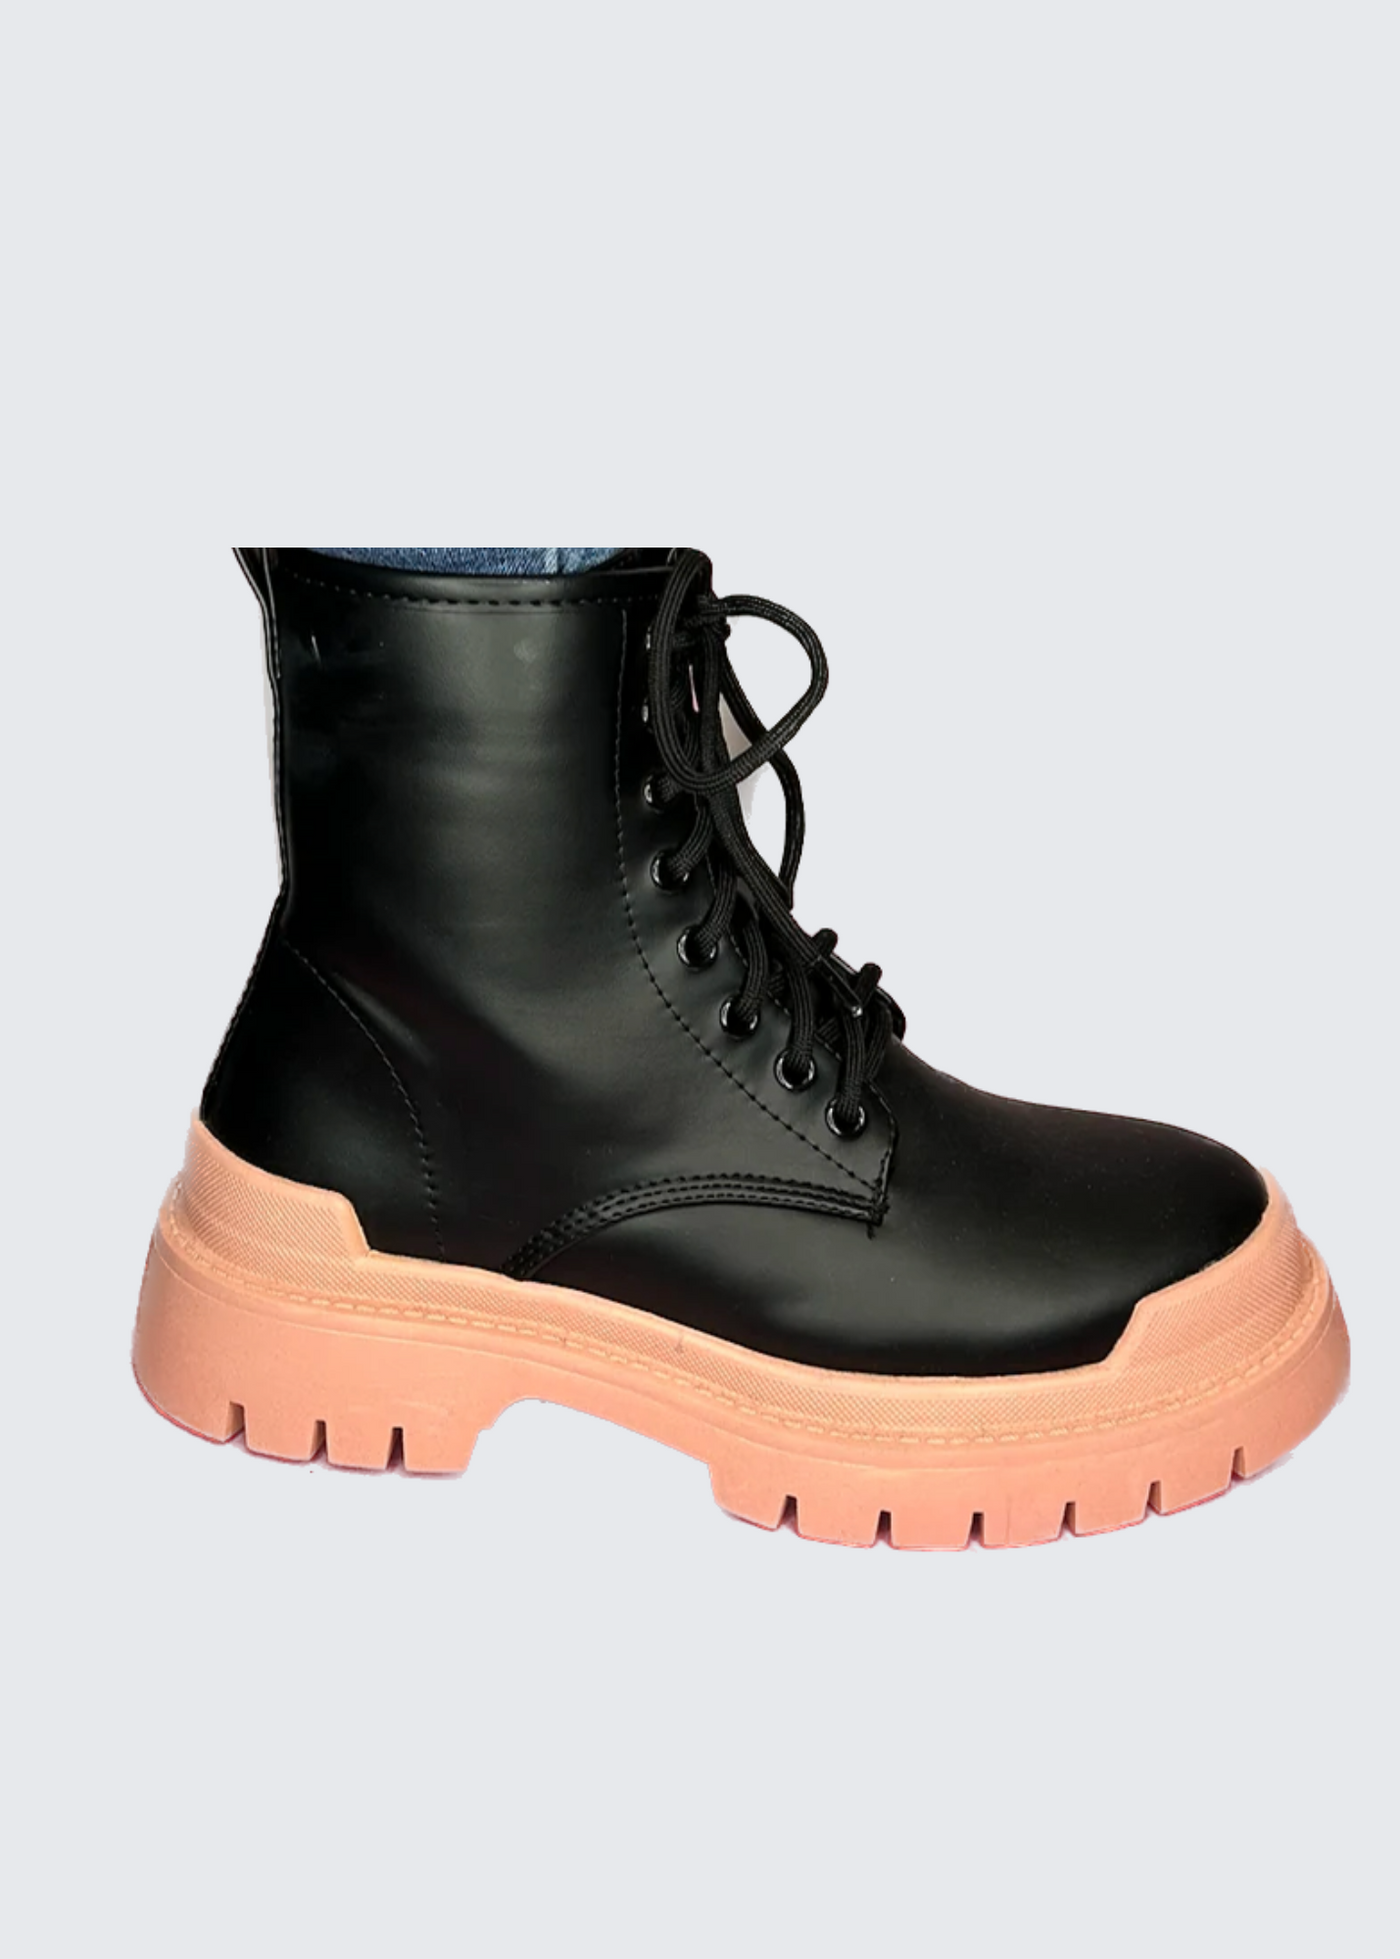 Black Combat Boots w/ Pink Soles